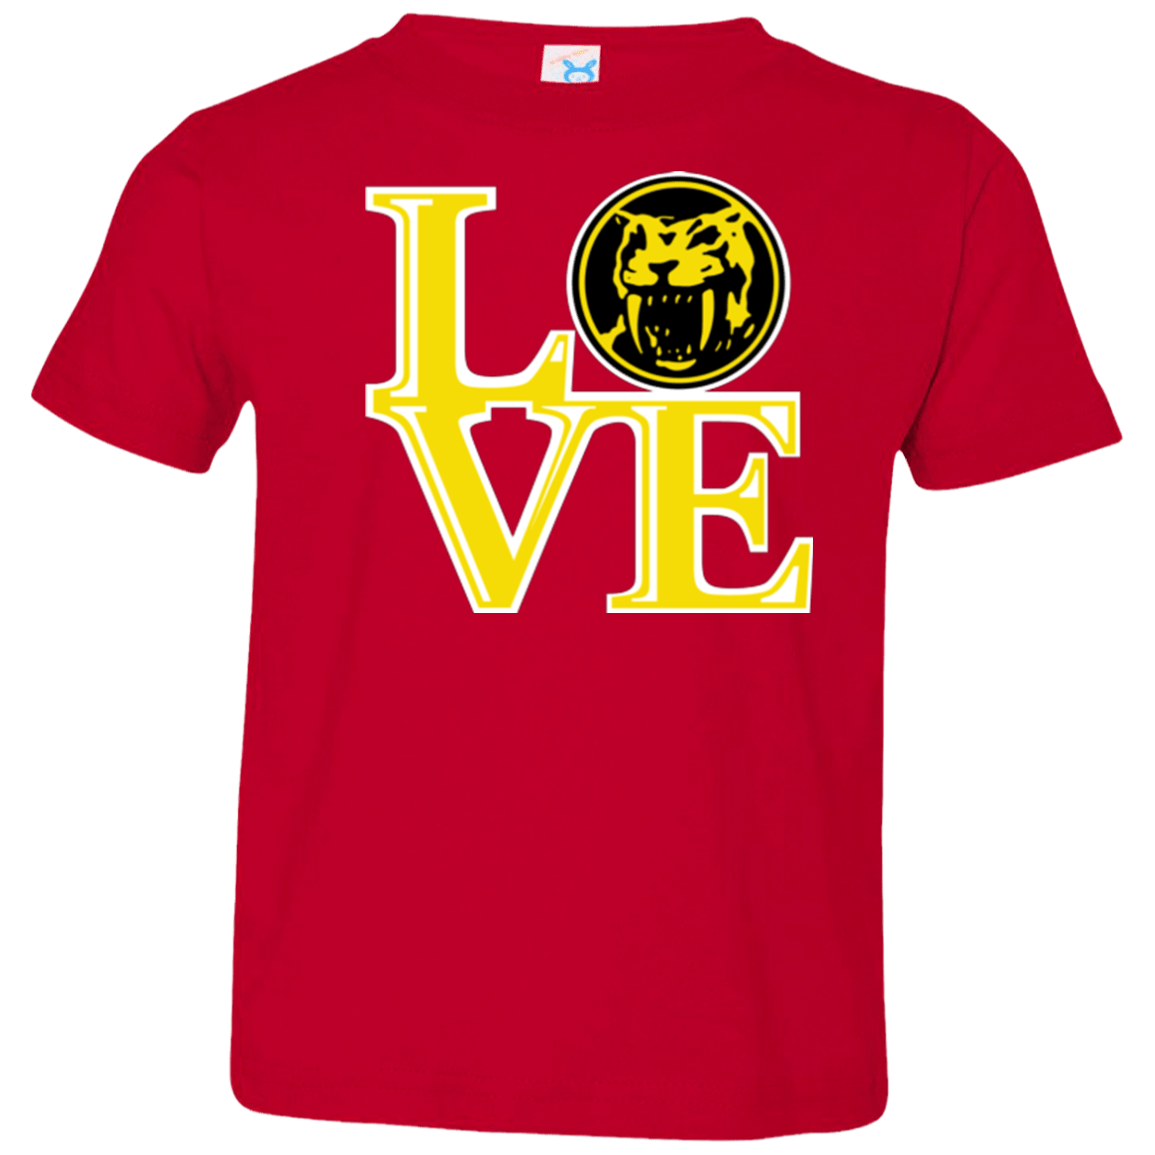 T-Shirts Red / 2T Yellow Ranger LOVE Toddler Premium T-Shirt